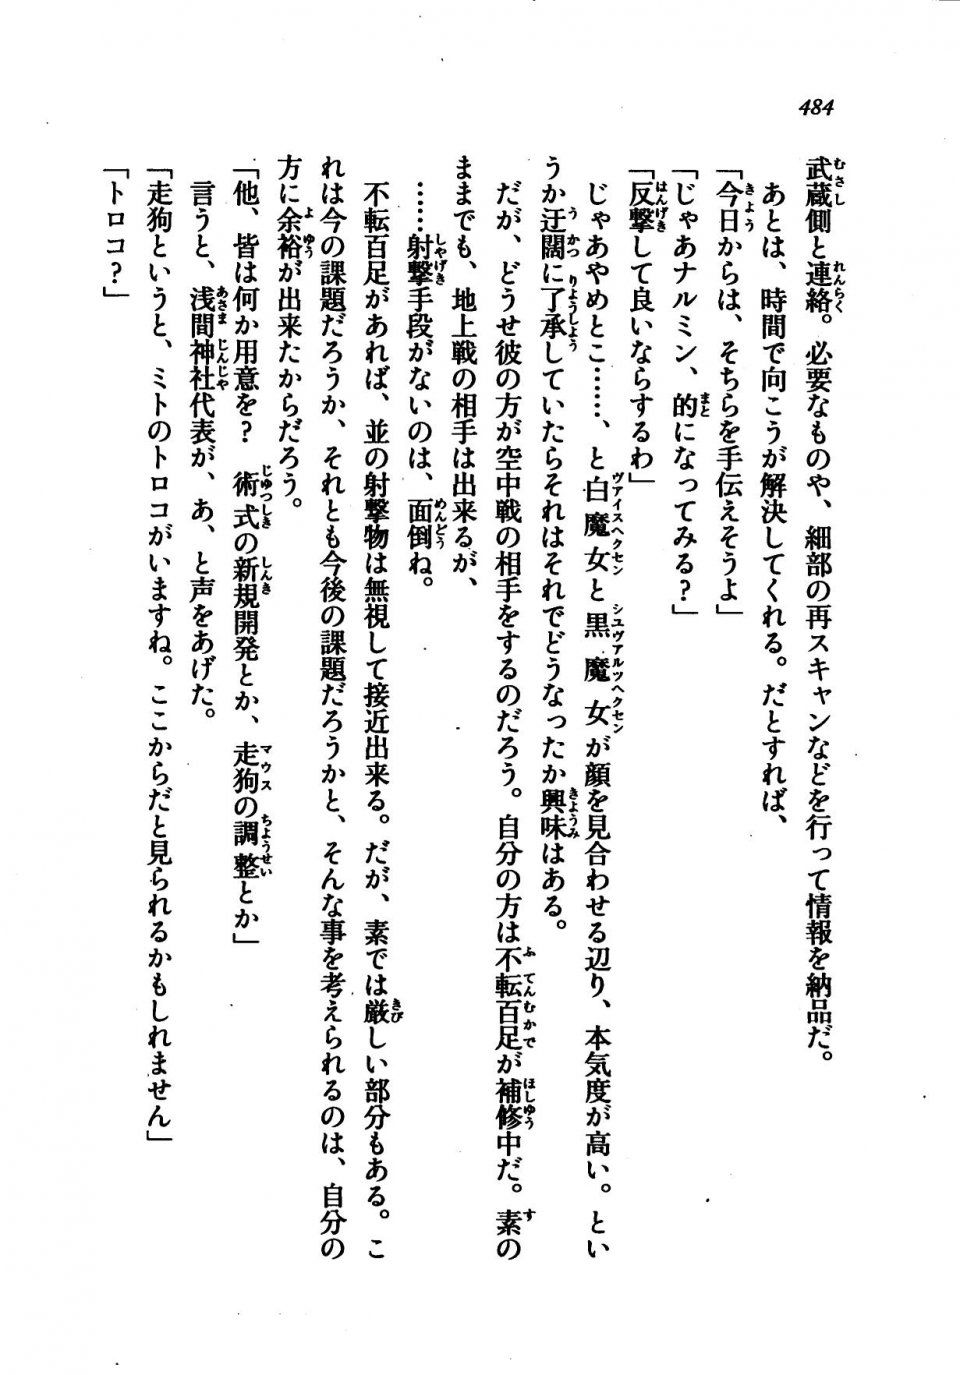 Kyoukai Senjou no Horizon LN Vol 21(8C) Part 1 - Photo #483